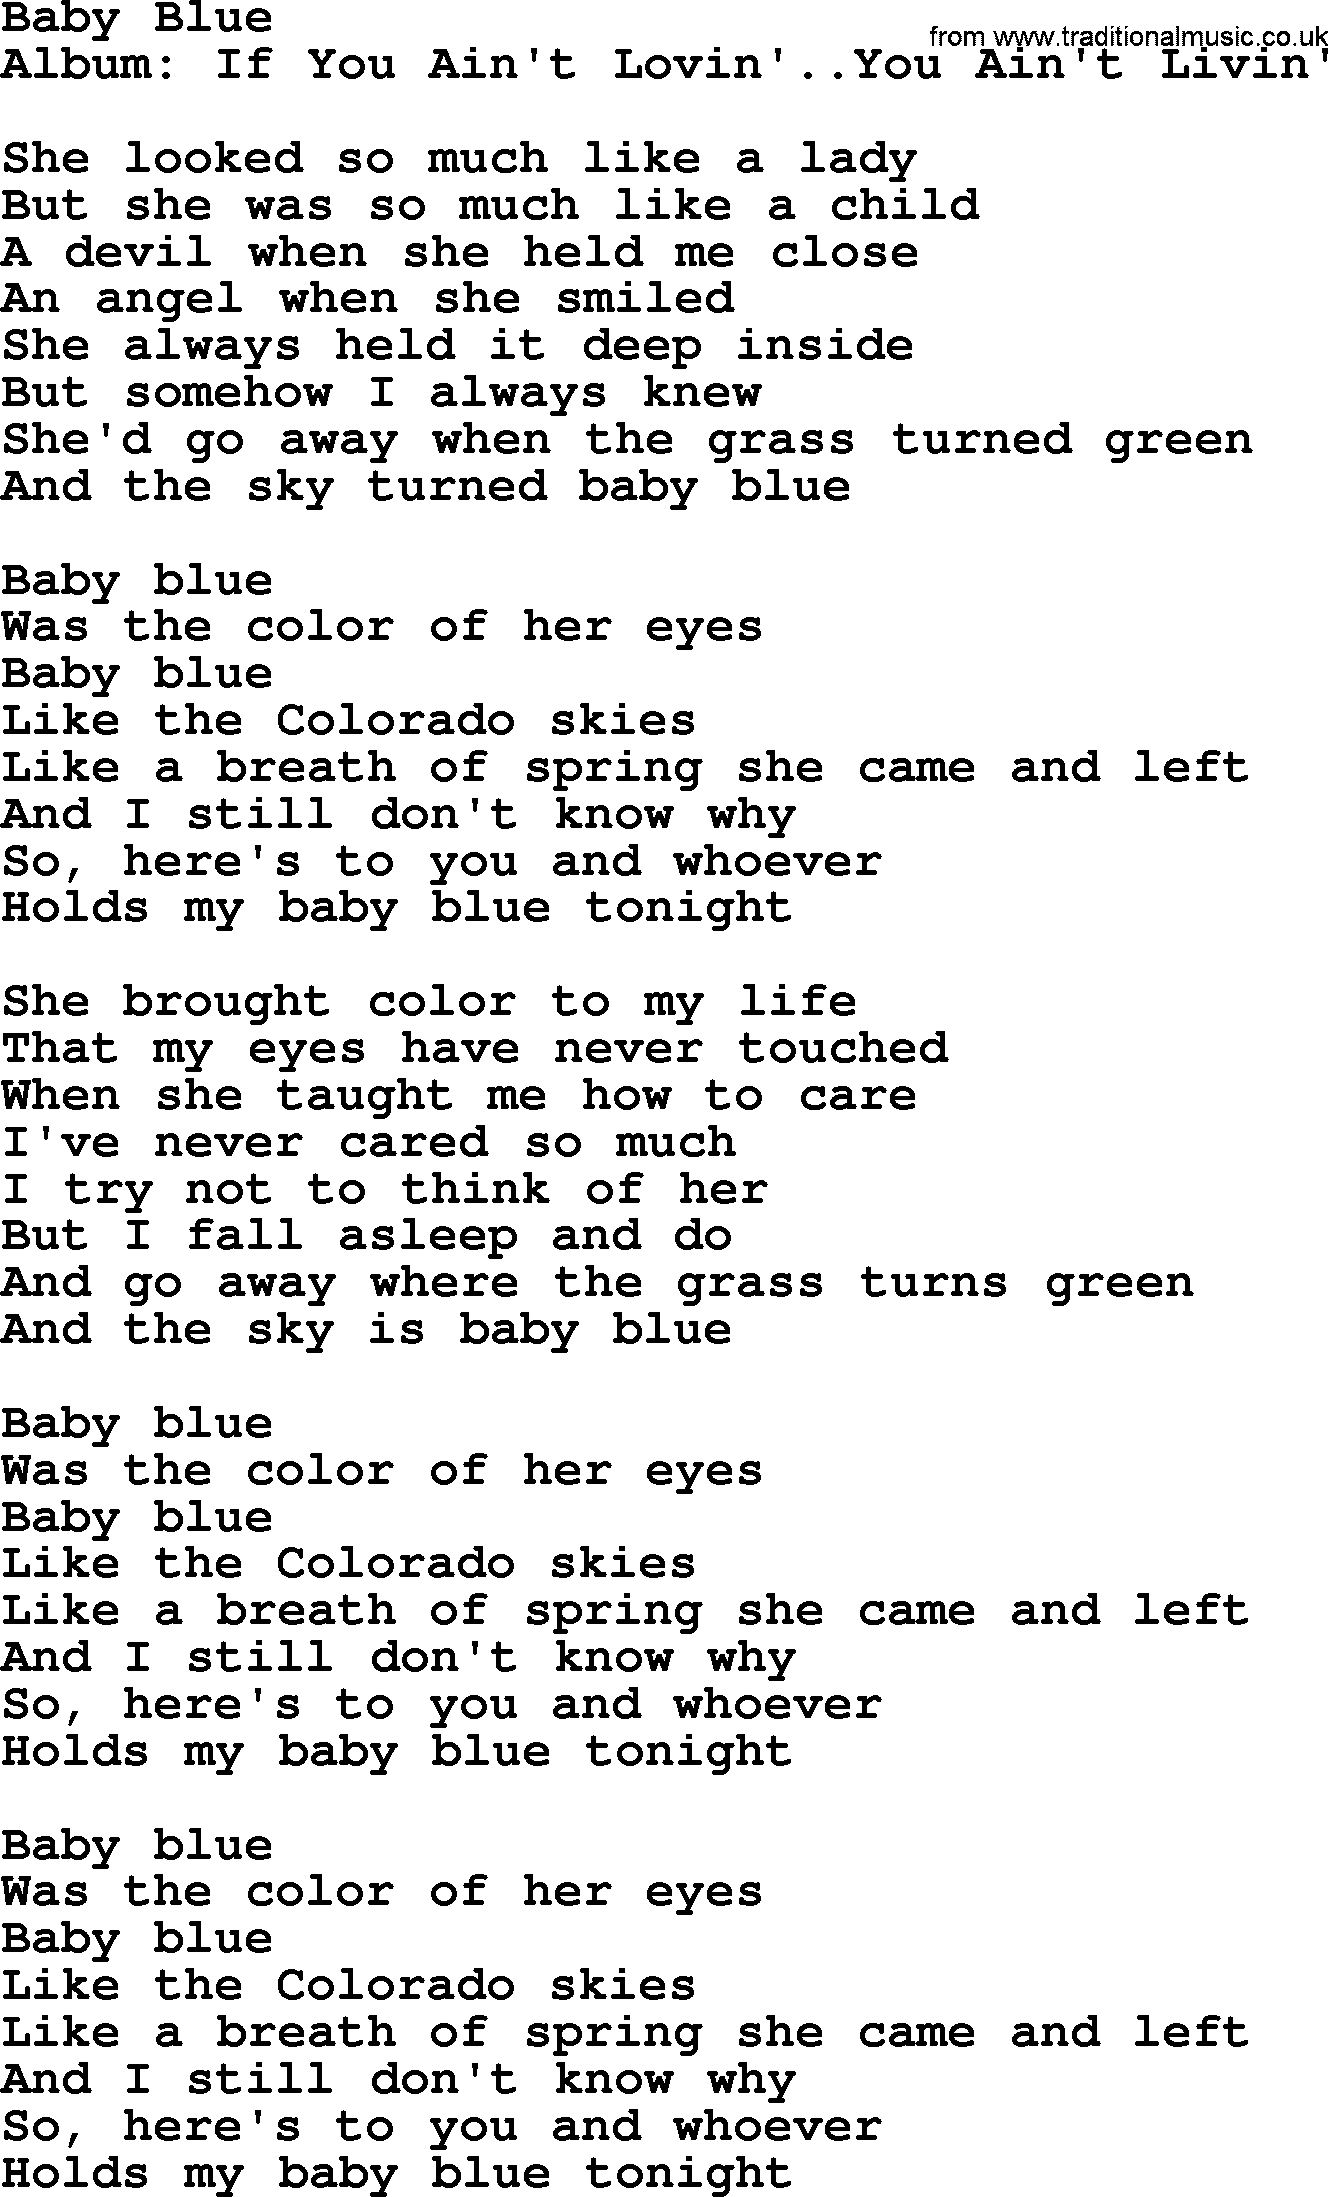 George Strait song: Baby Blue, lyrics